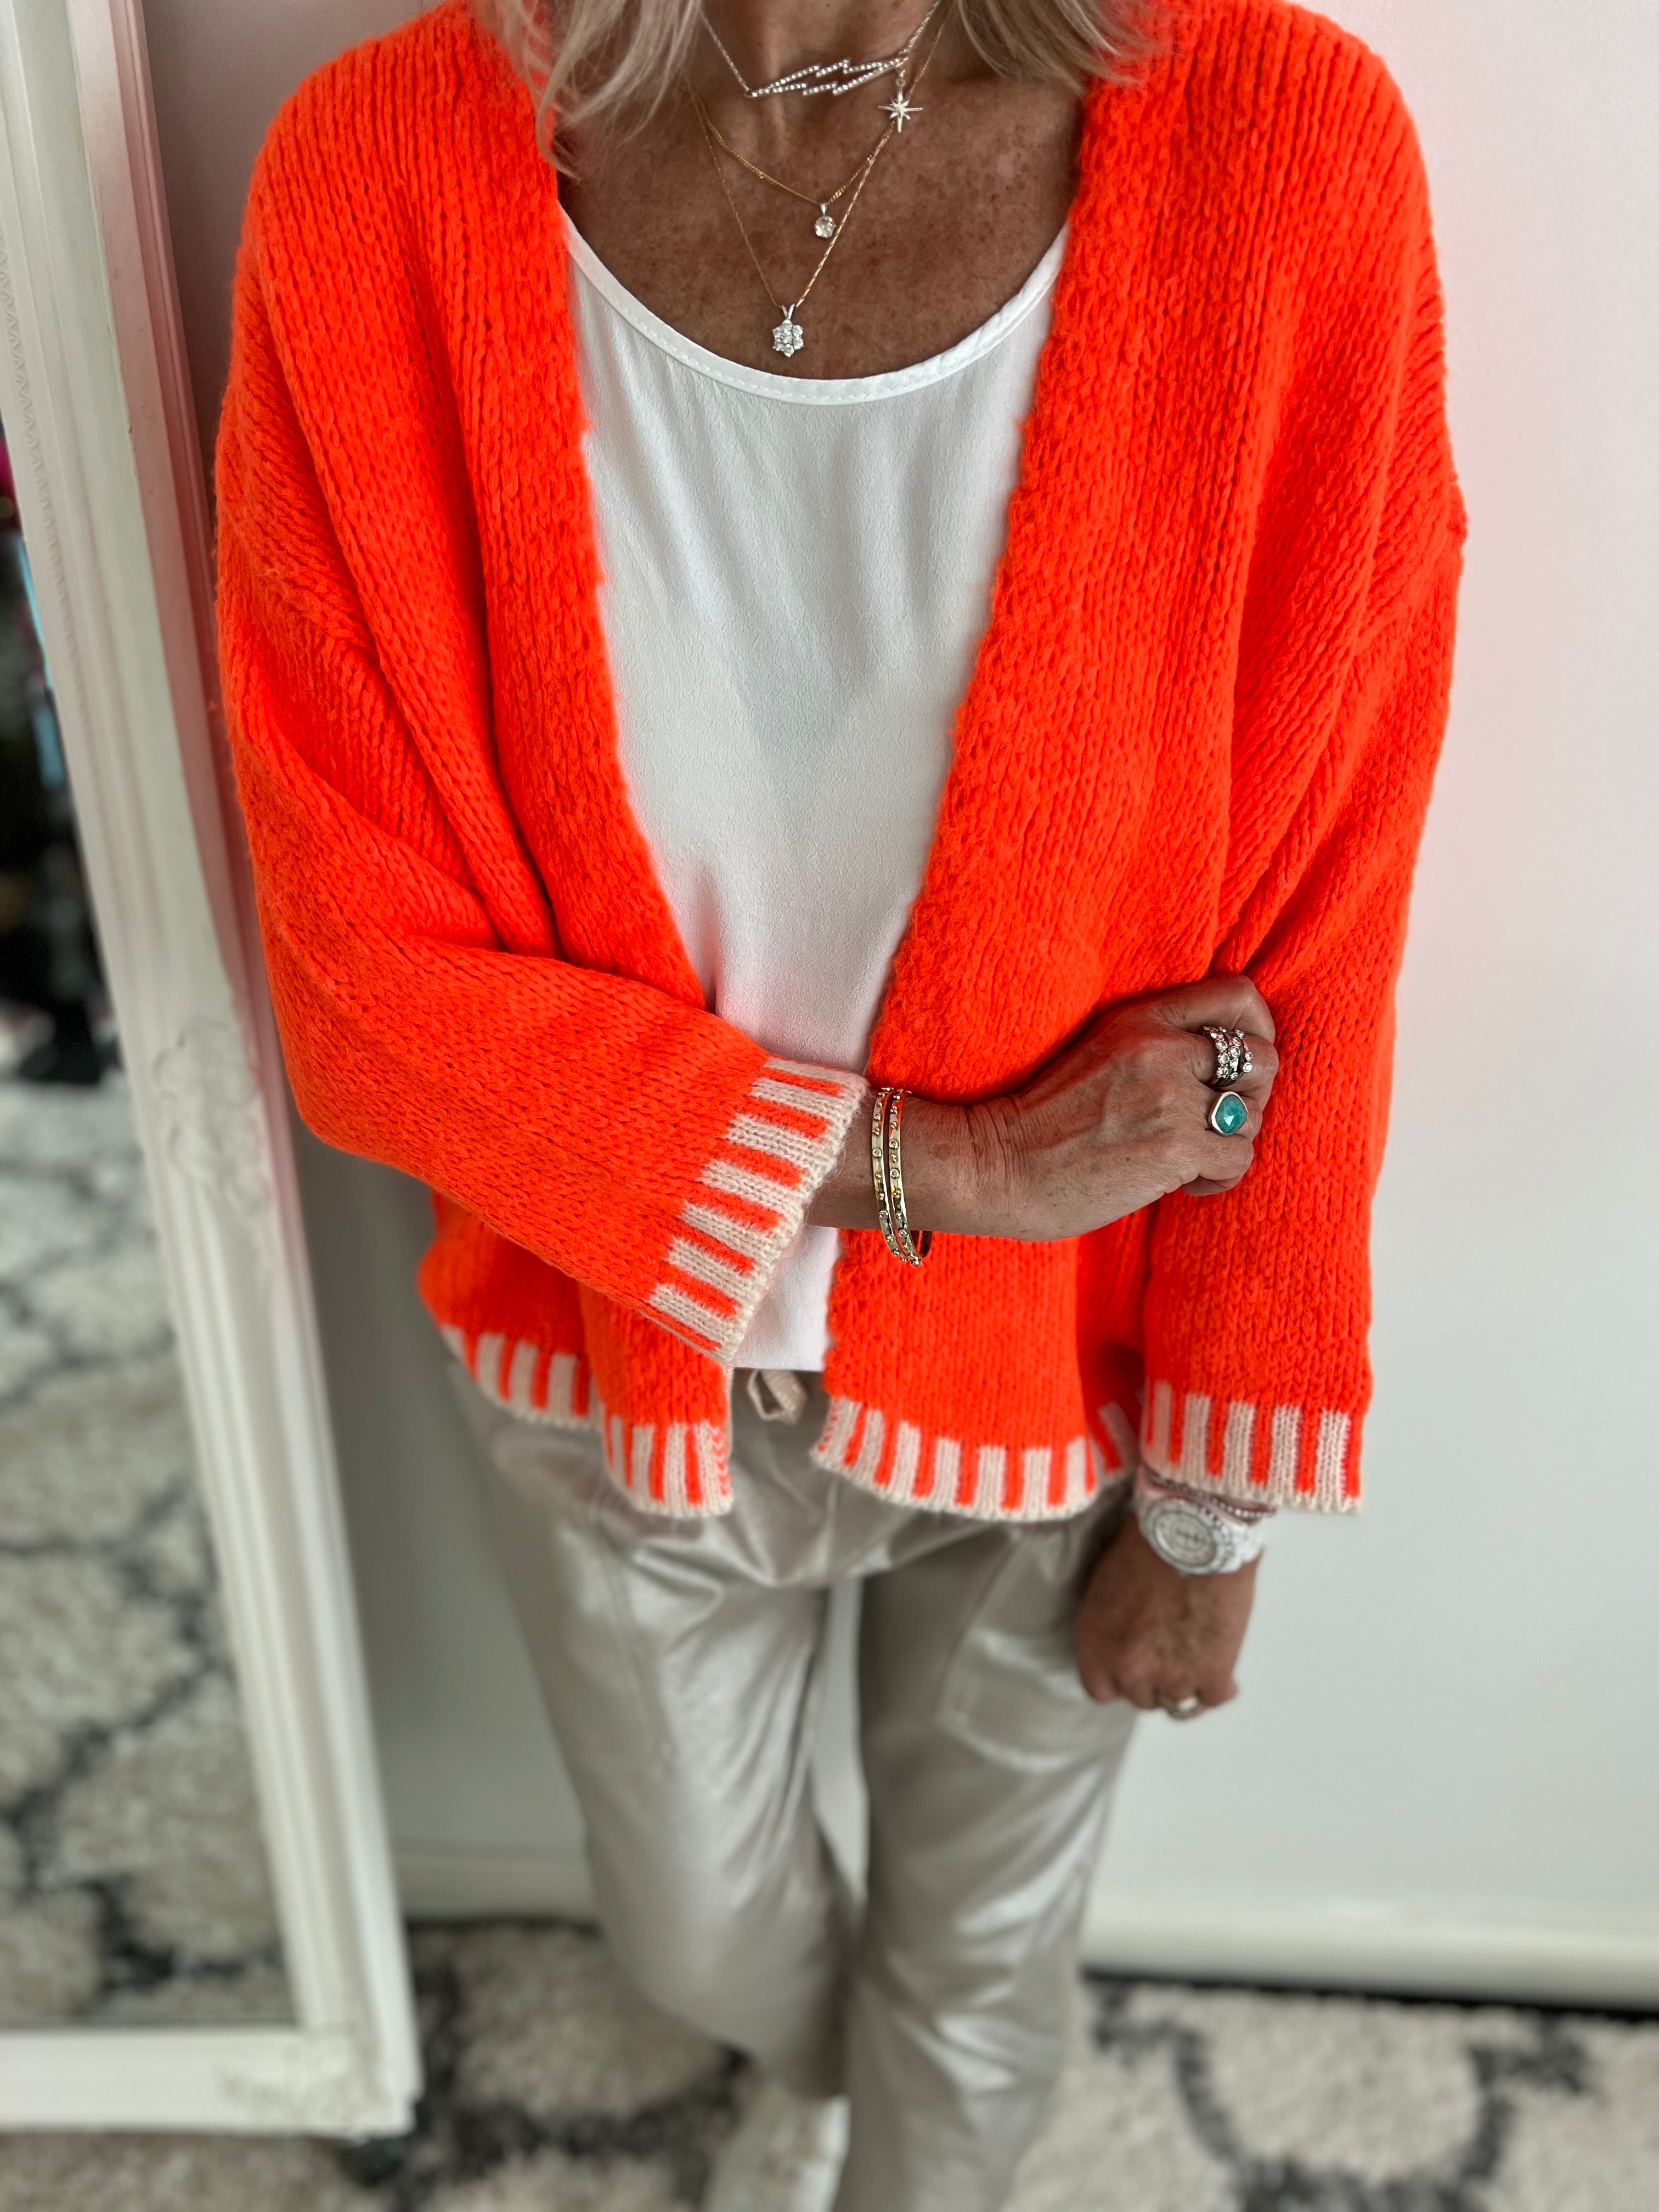 Stunning Cardi in Neon Orange & White